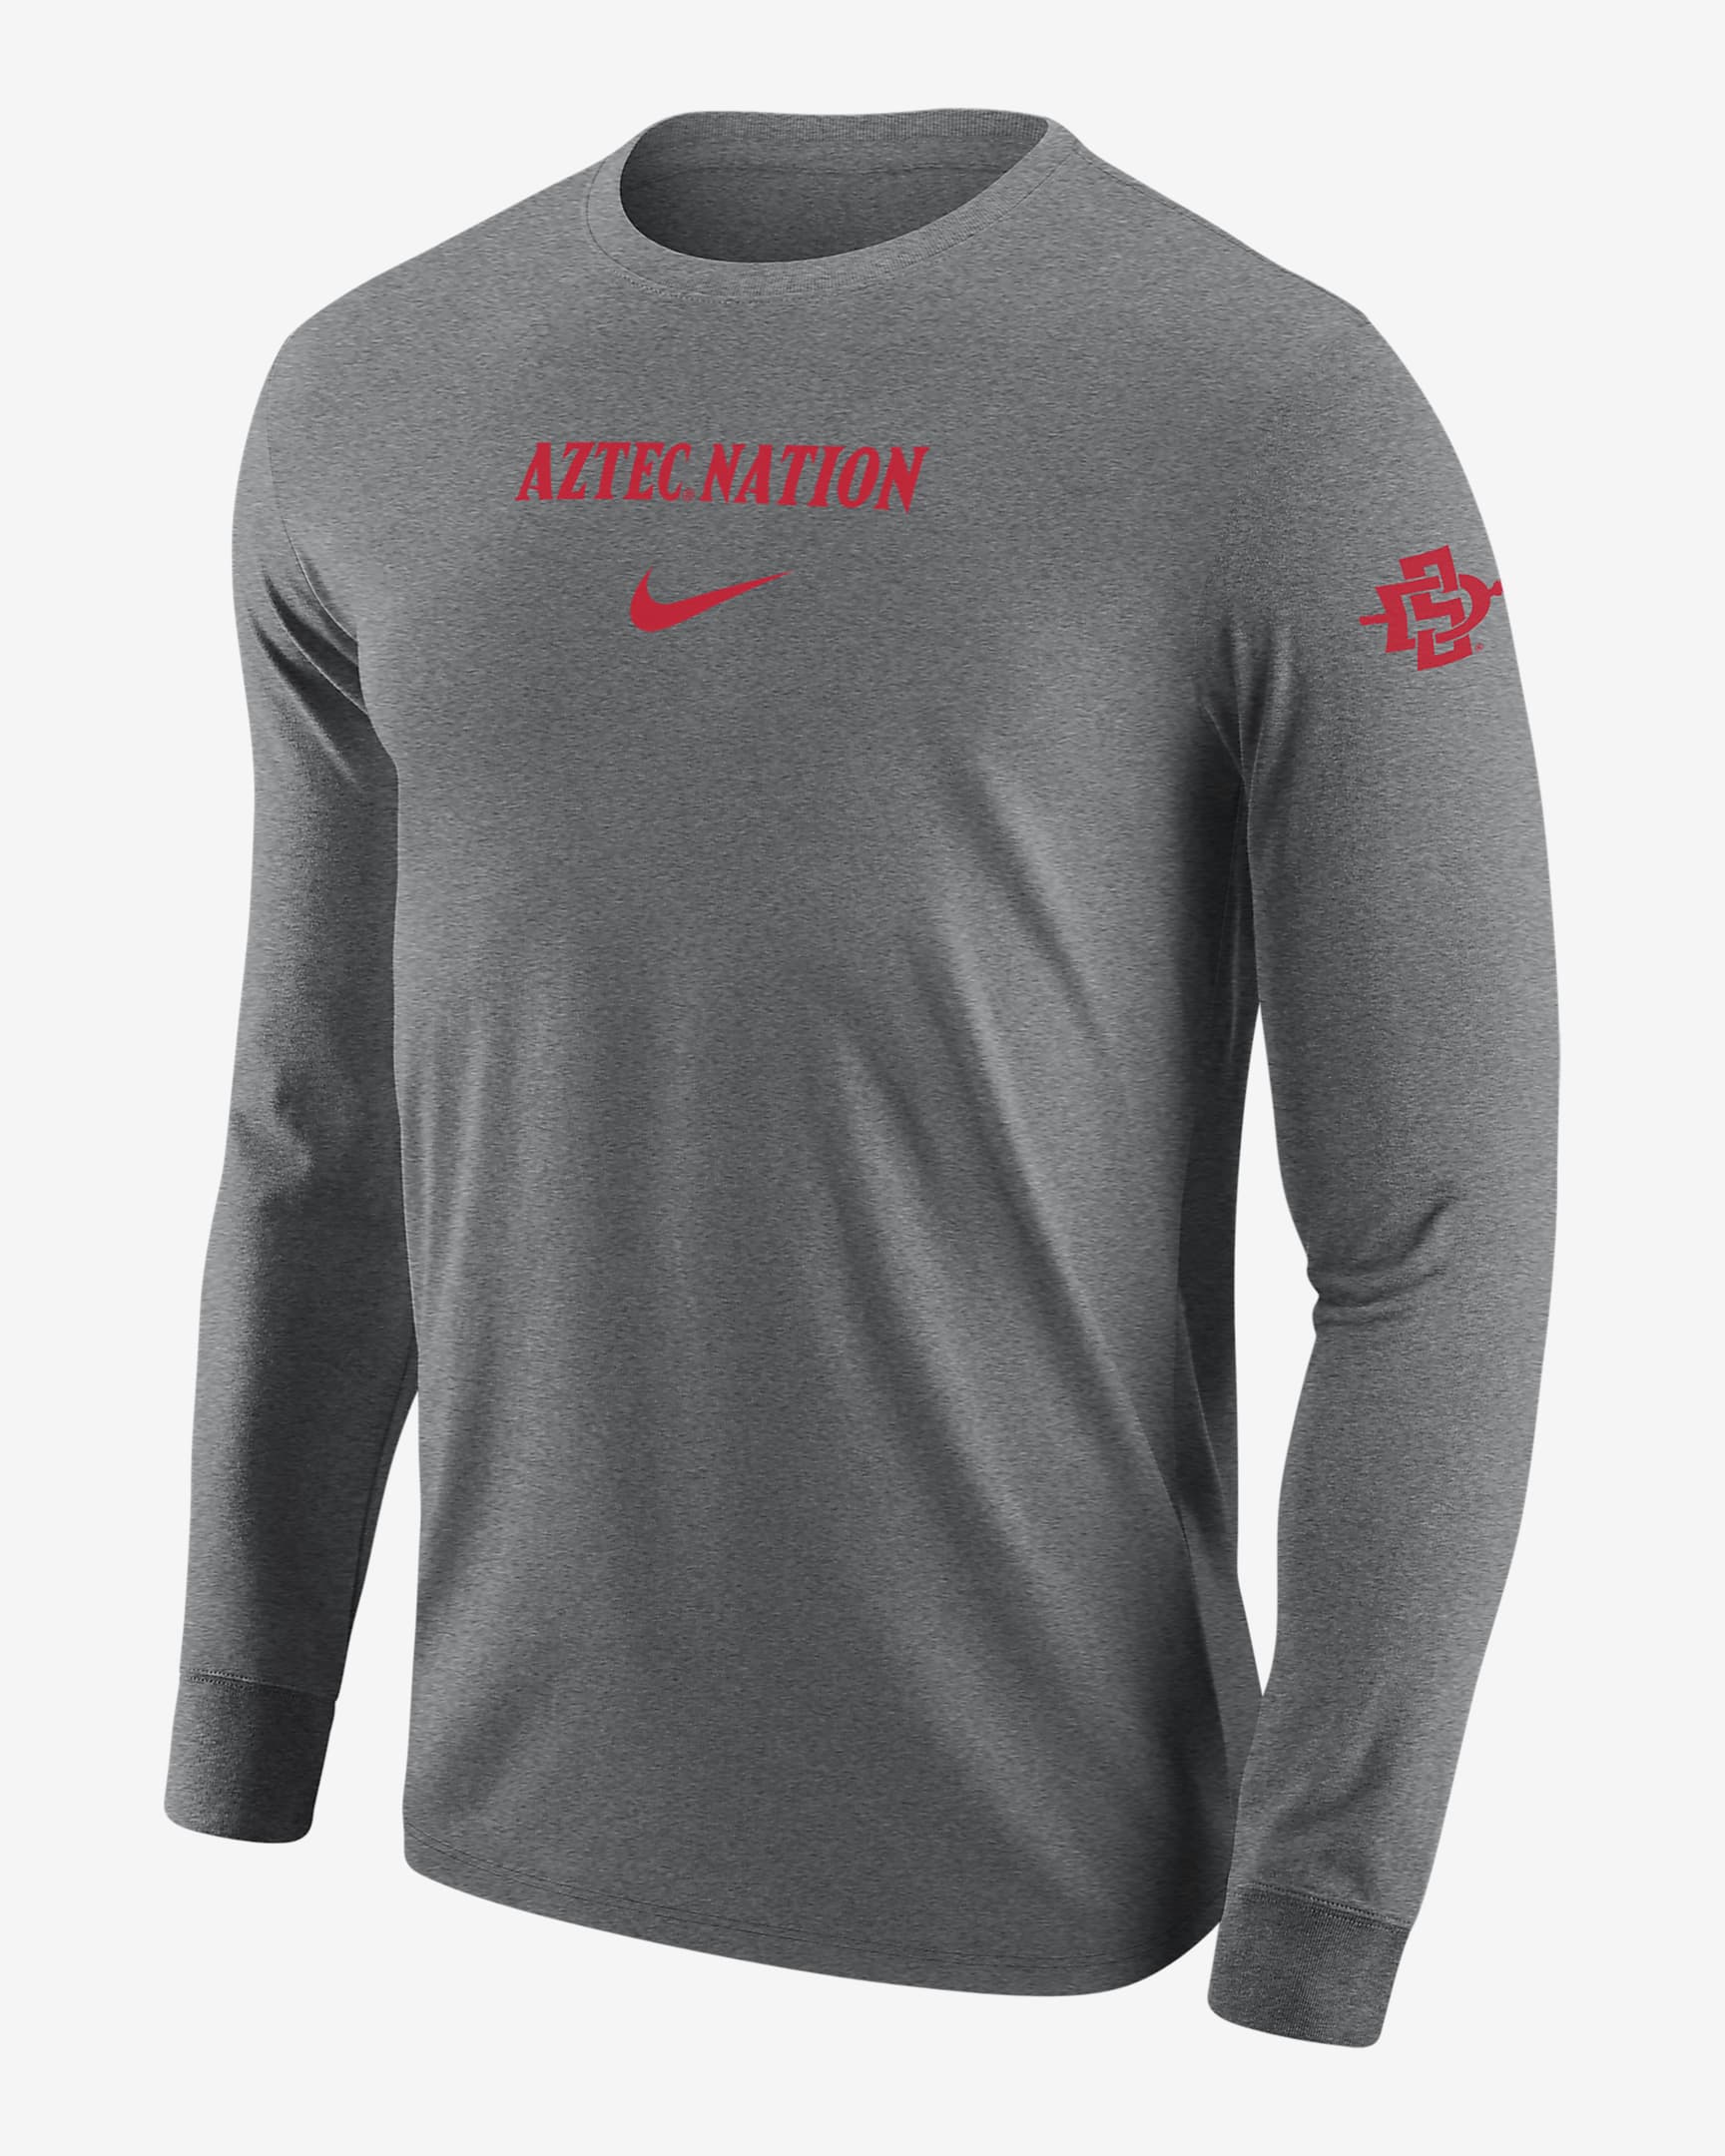 San Diego State Men's Nike College Long-Sleeve T-Shirt. Nike.com